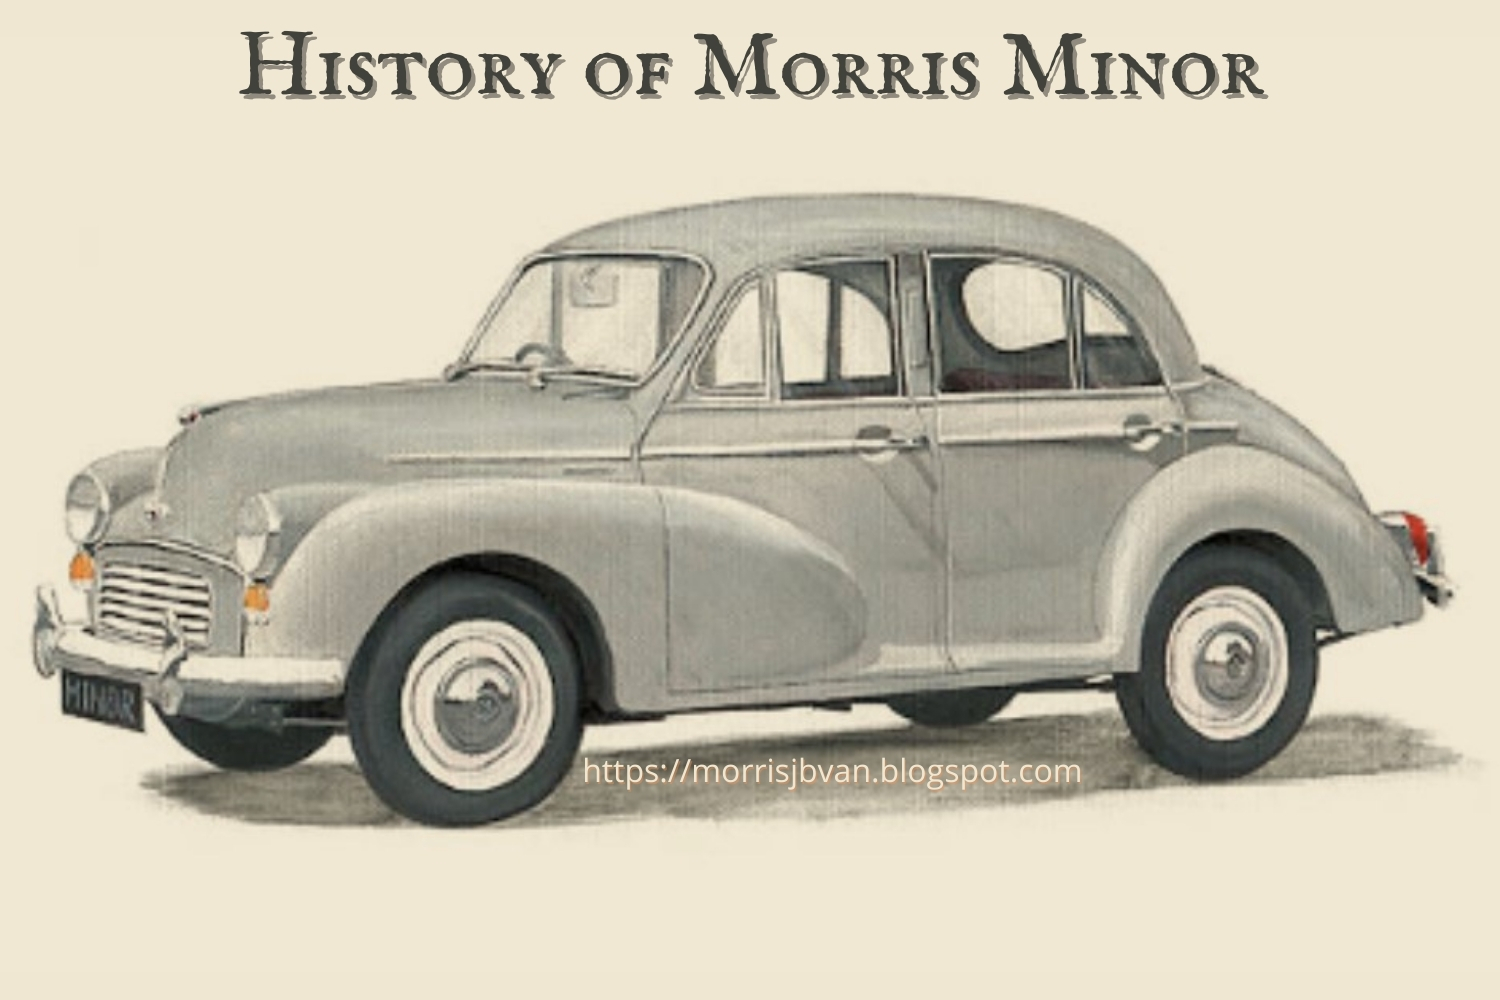 A Short History of Morris Minor